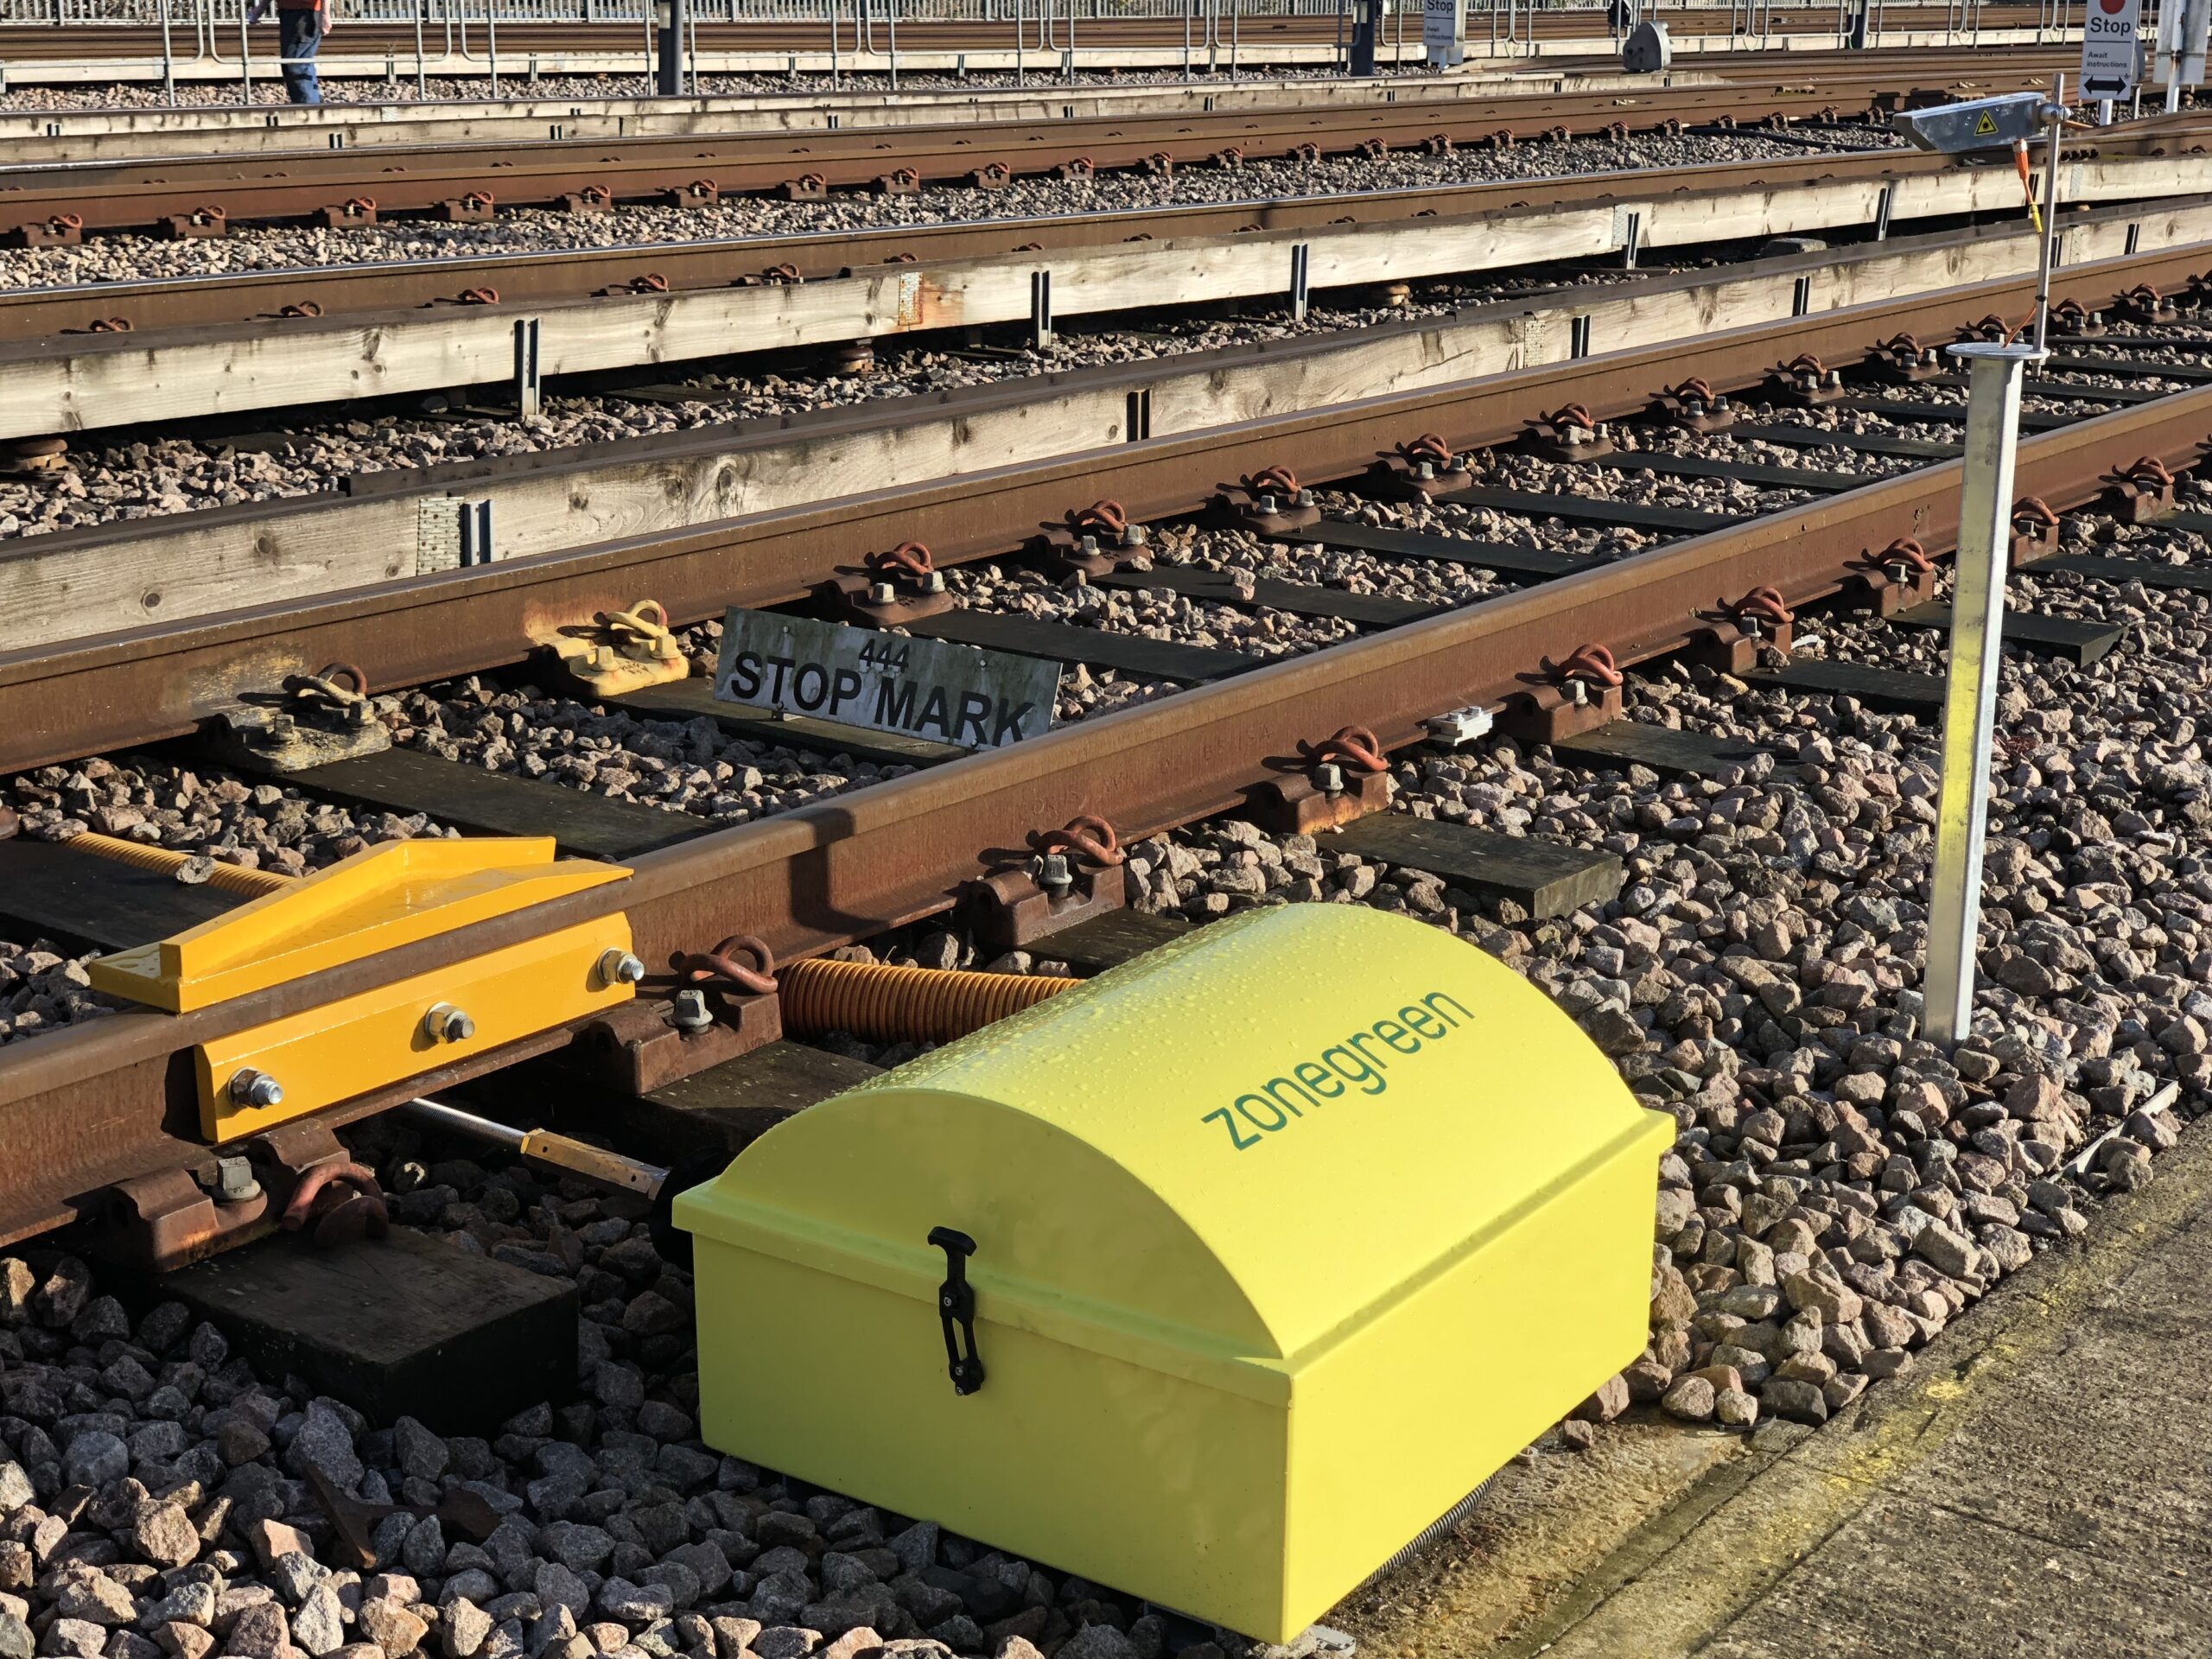 Yellow Zonegreen derailer beside railway track